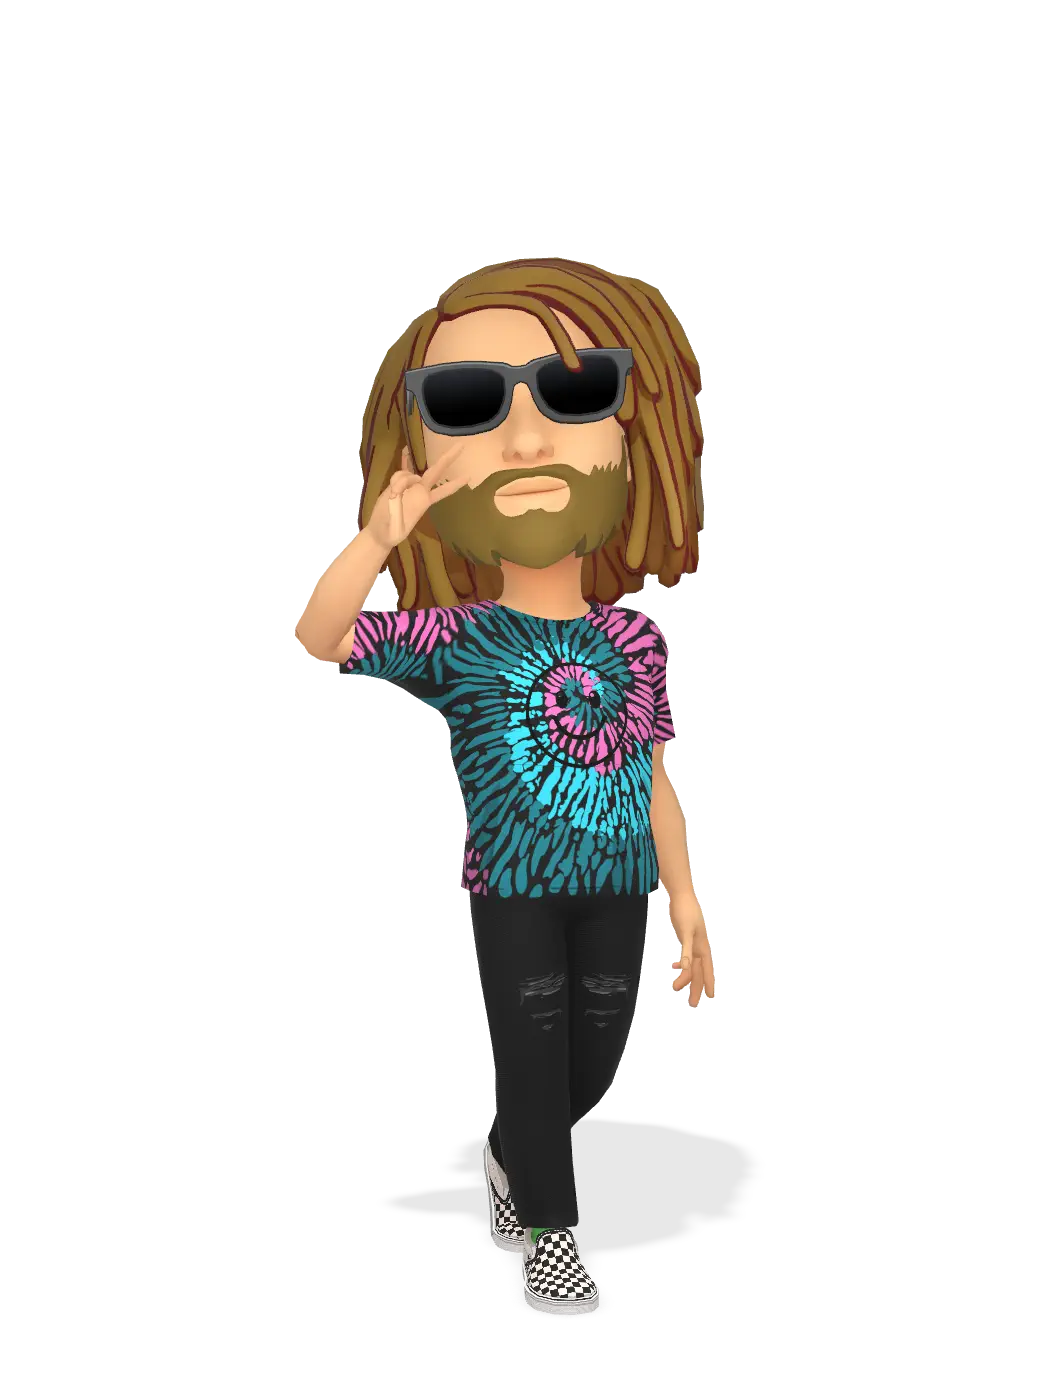 3D Bitmoji for default1drake avatar